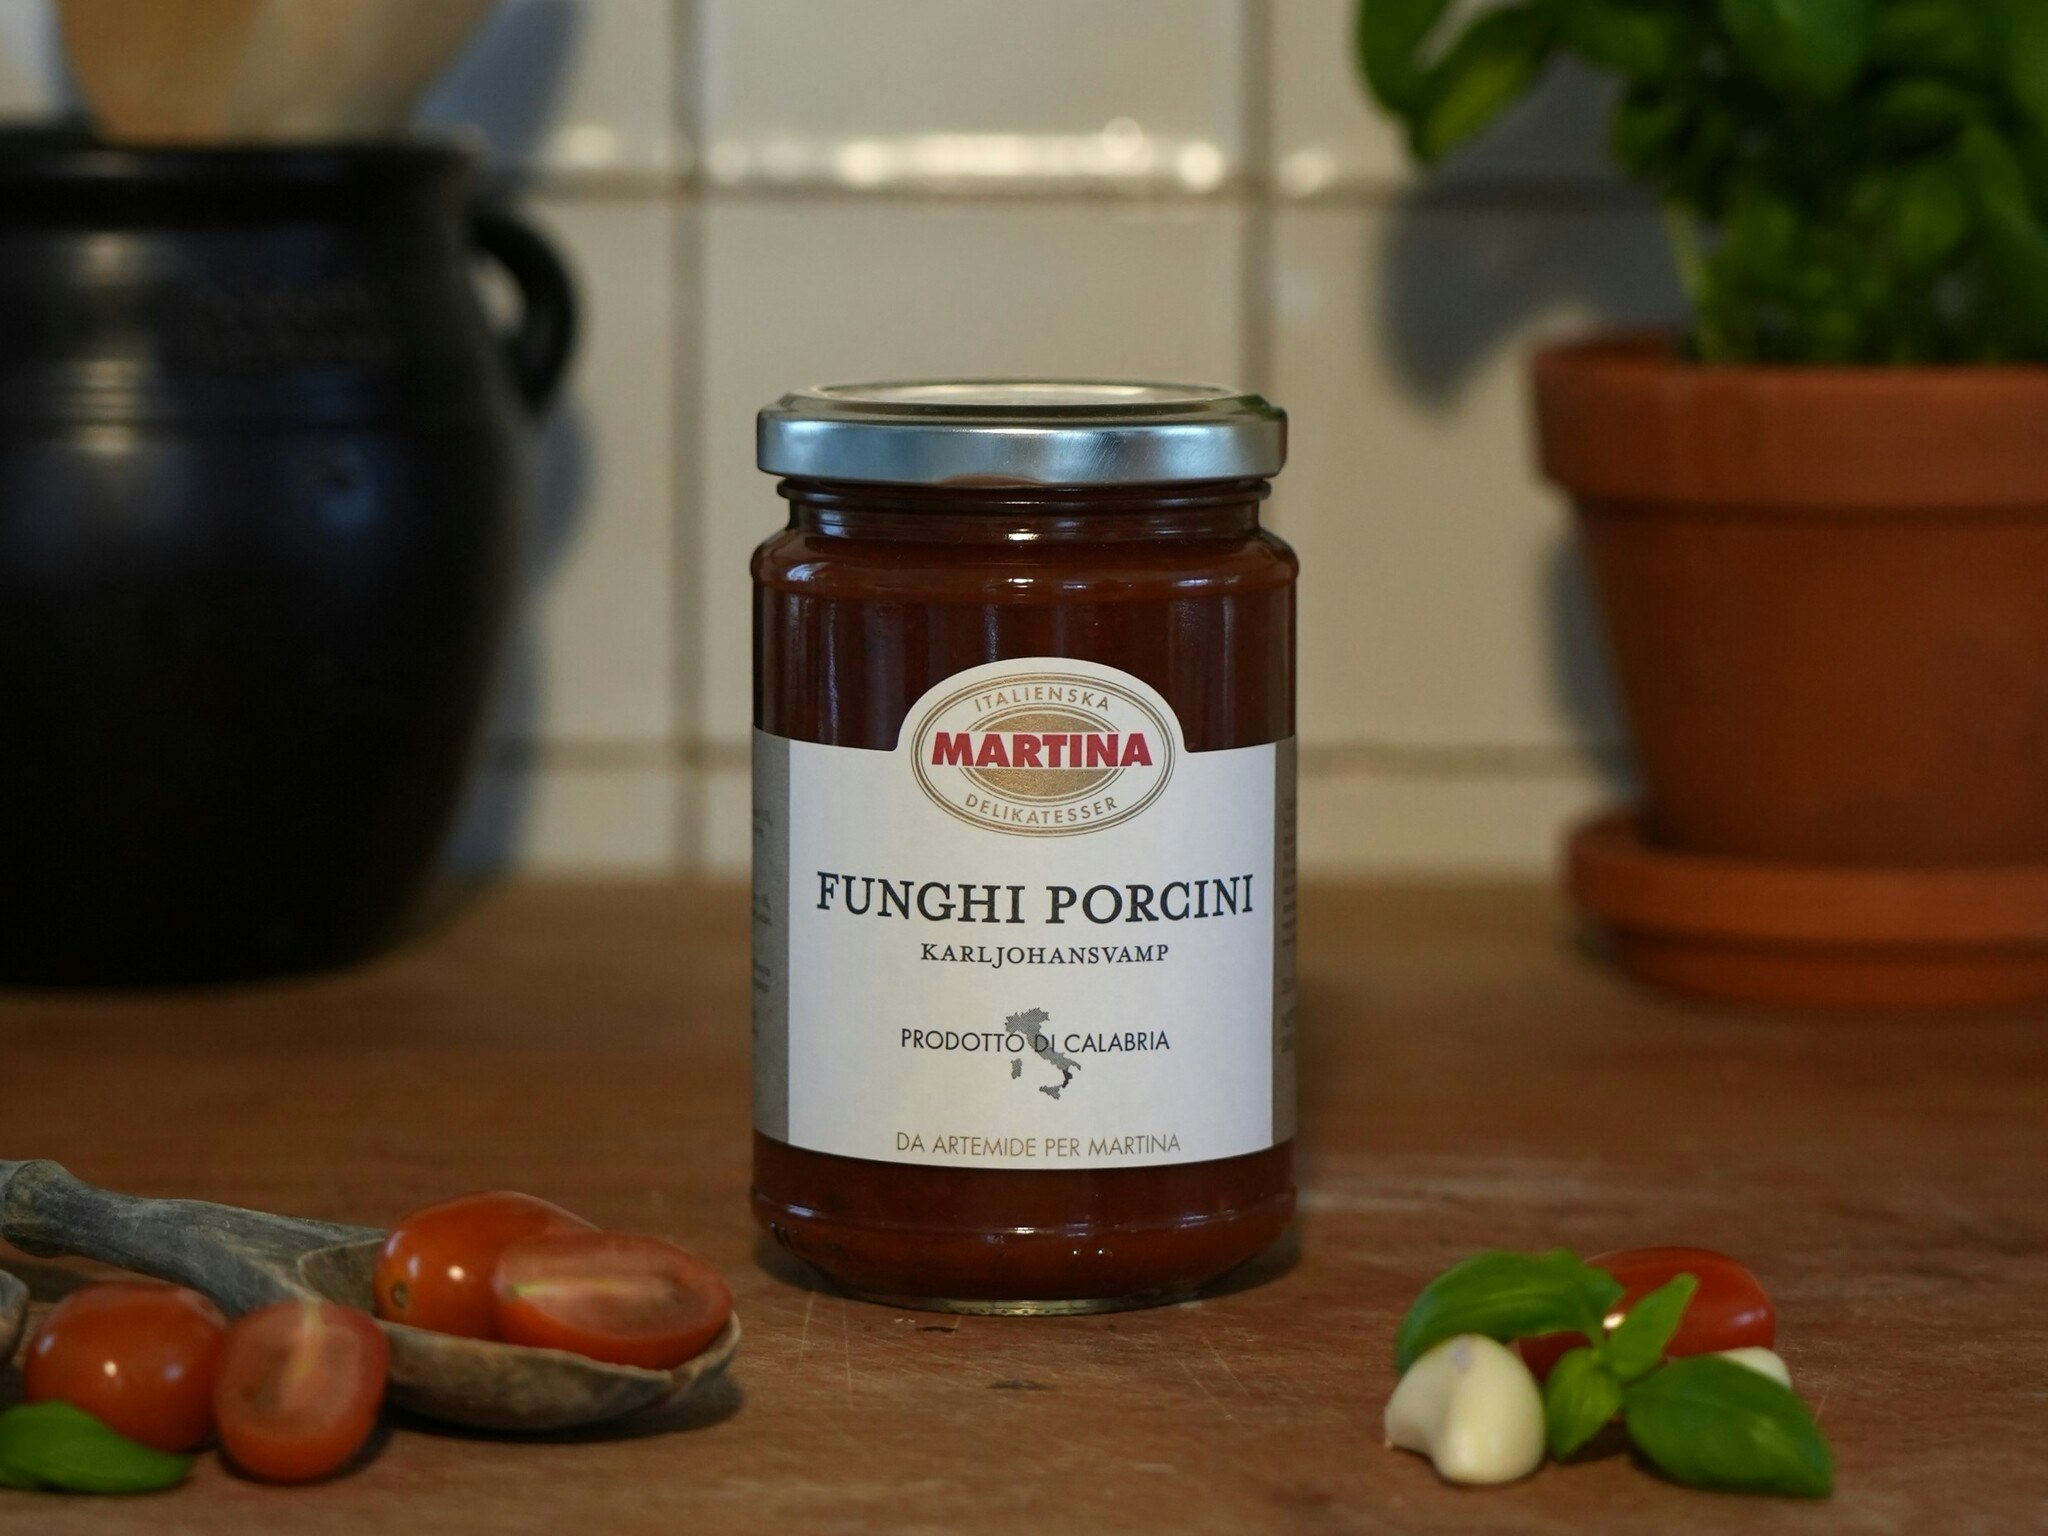 Martinas tomatsås Funghi porcini (Karljohansvamp)